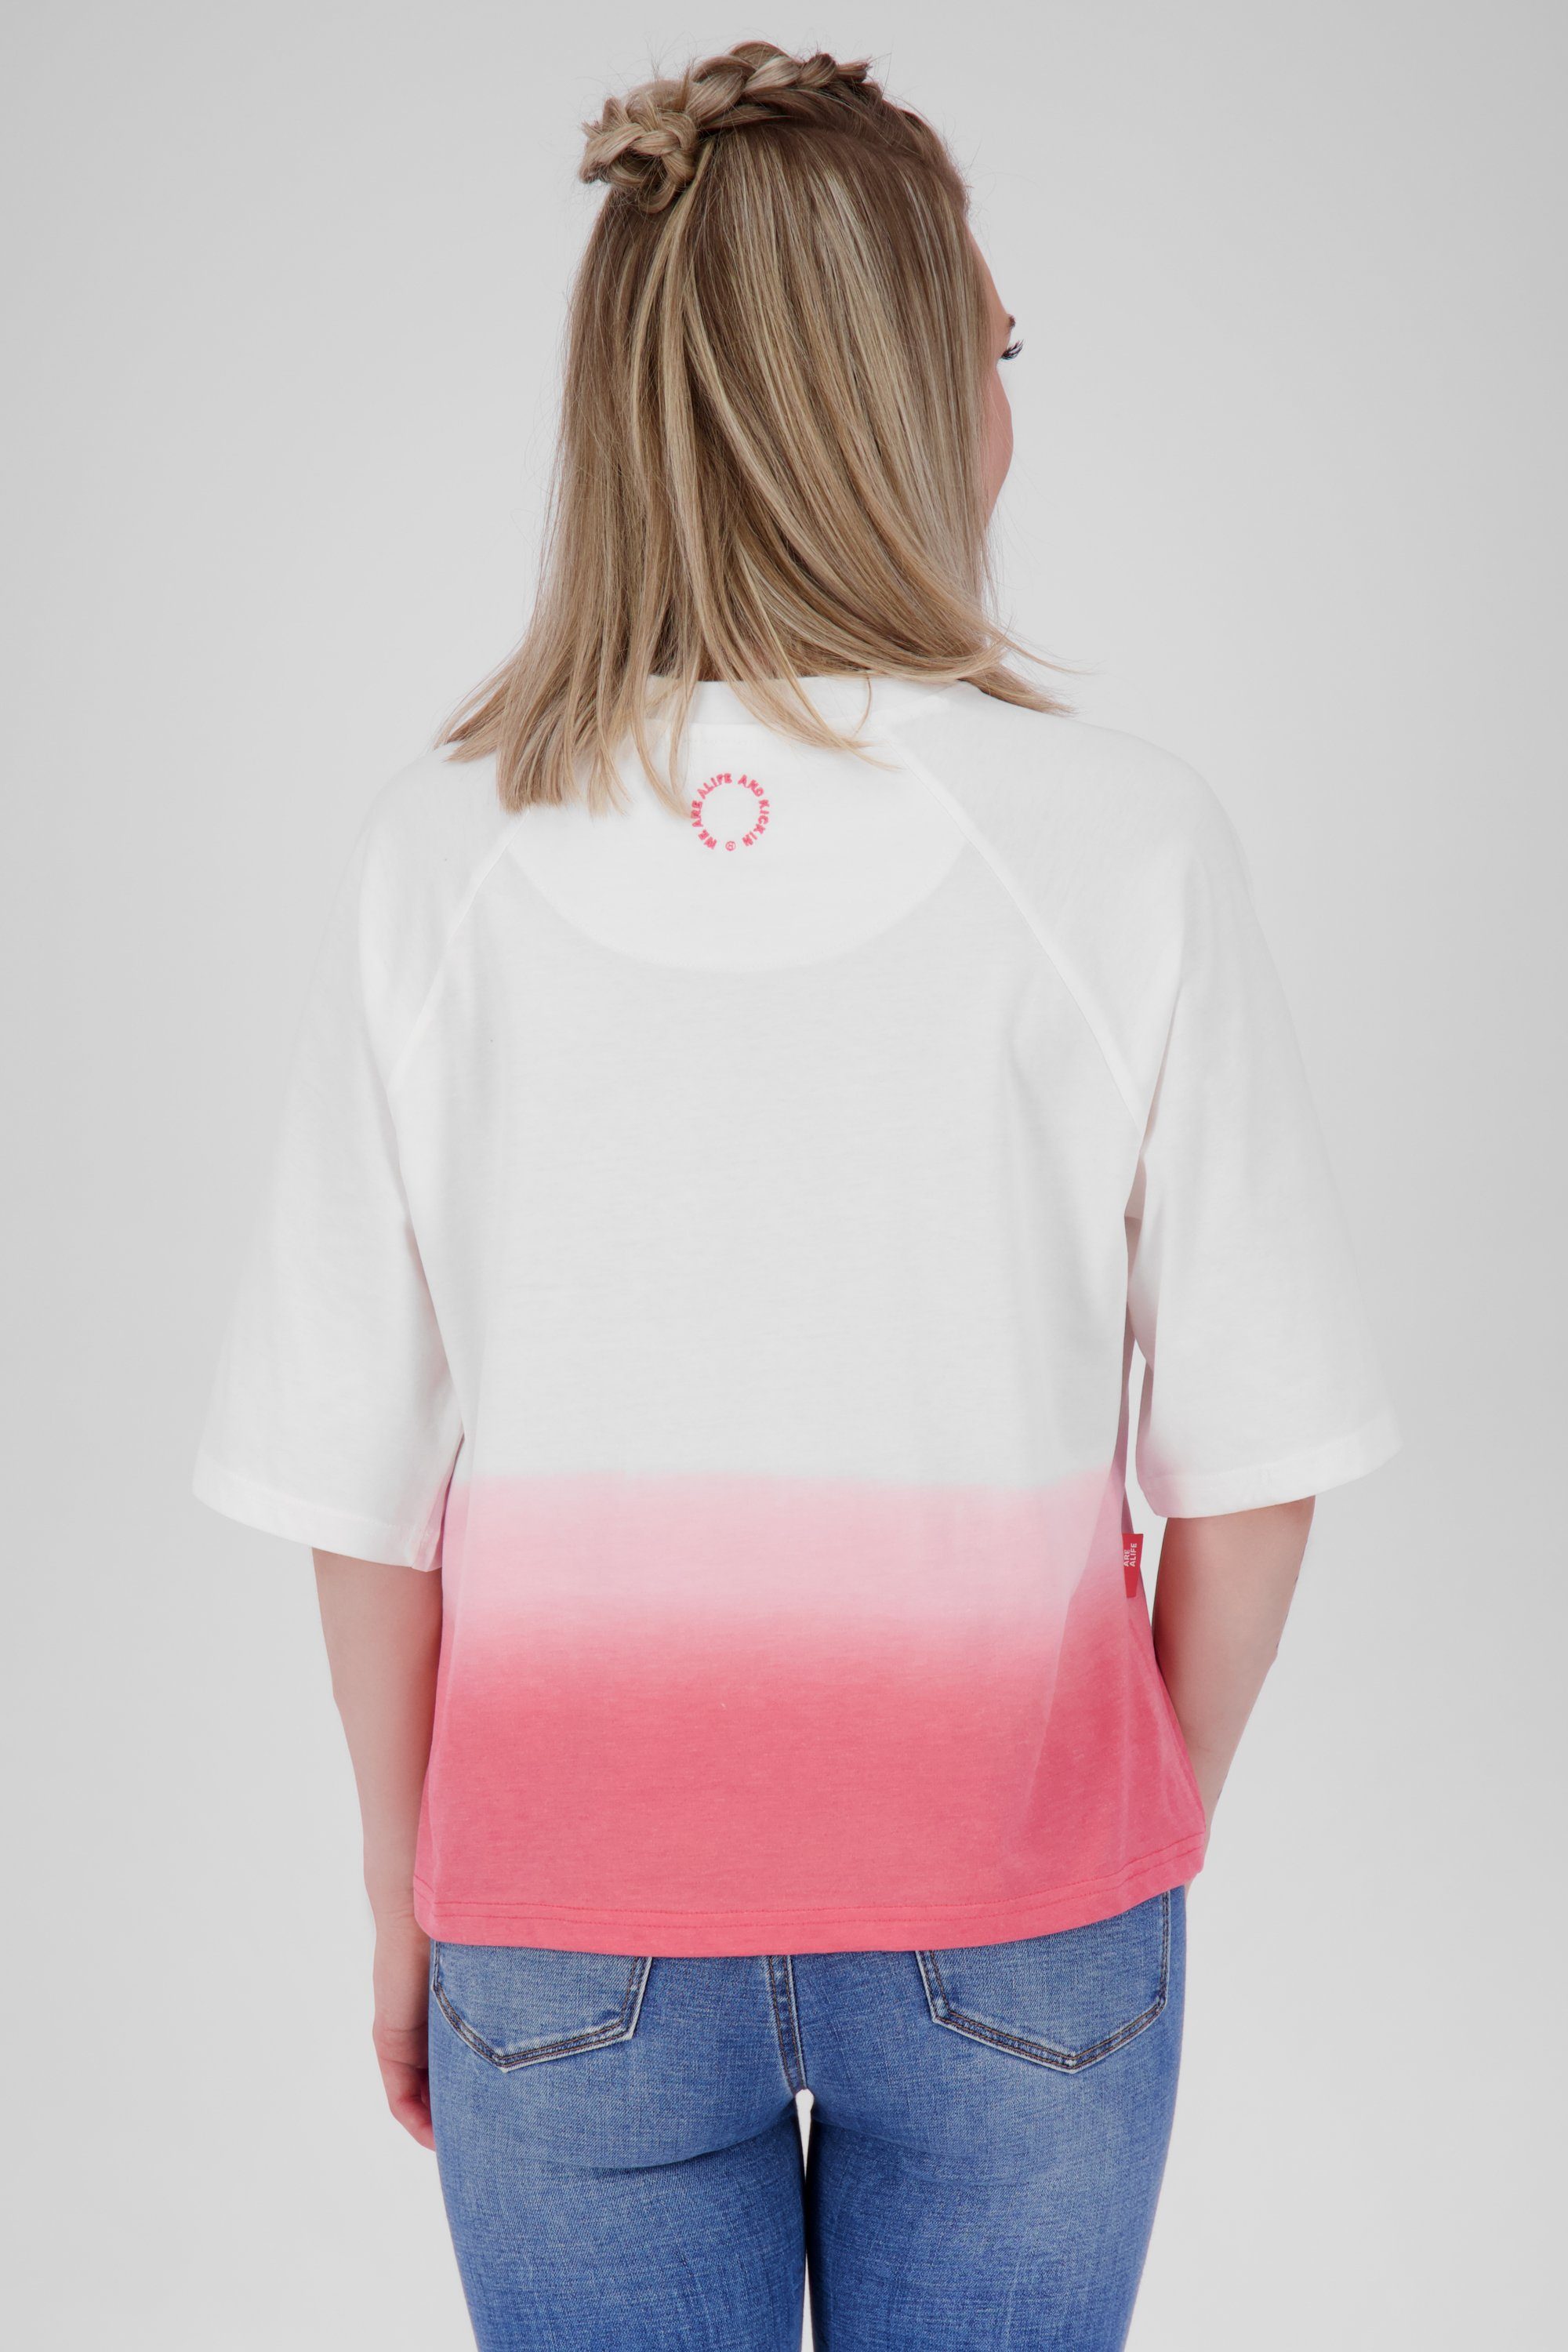 Kickin RubyAK & Rundhalsshirt flamingo Alife Shirt Shirt B Damen